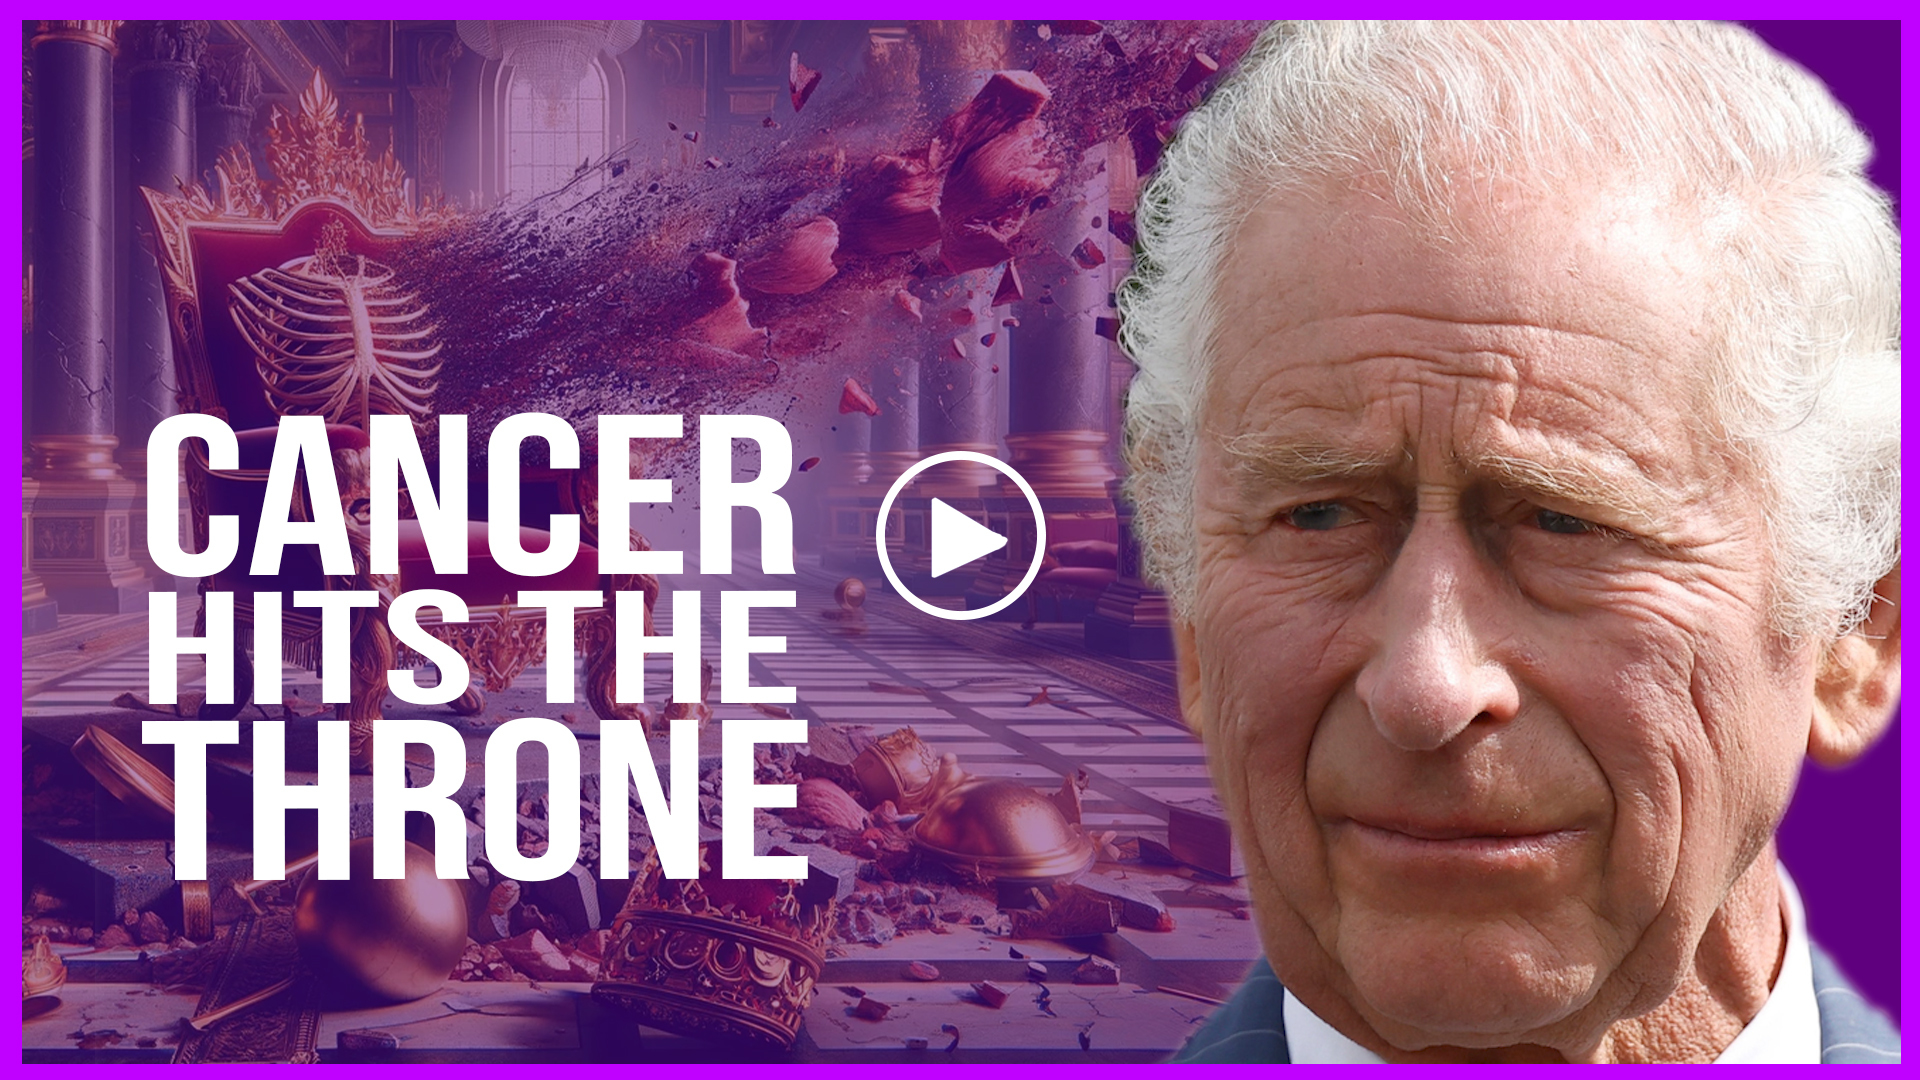 Cancer Hits The Throne #kingcharles #royalty #royals #cancer #crown #katemiddleton #princewilliam